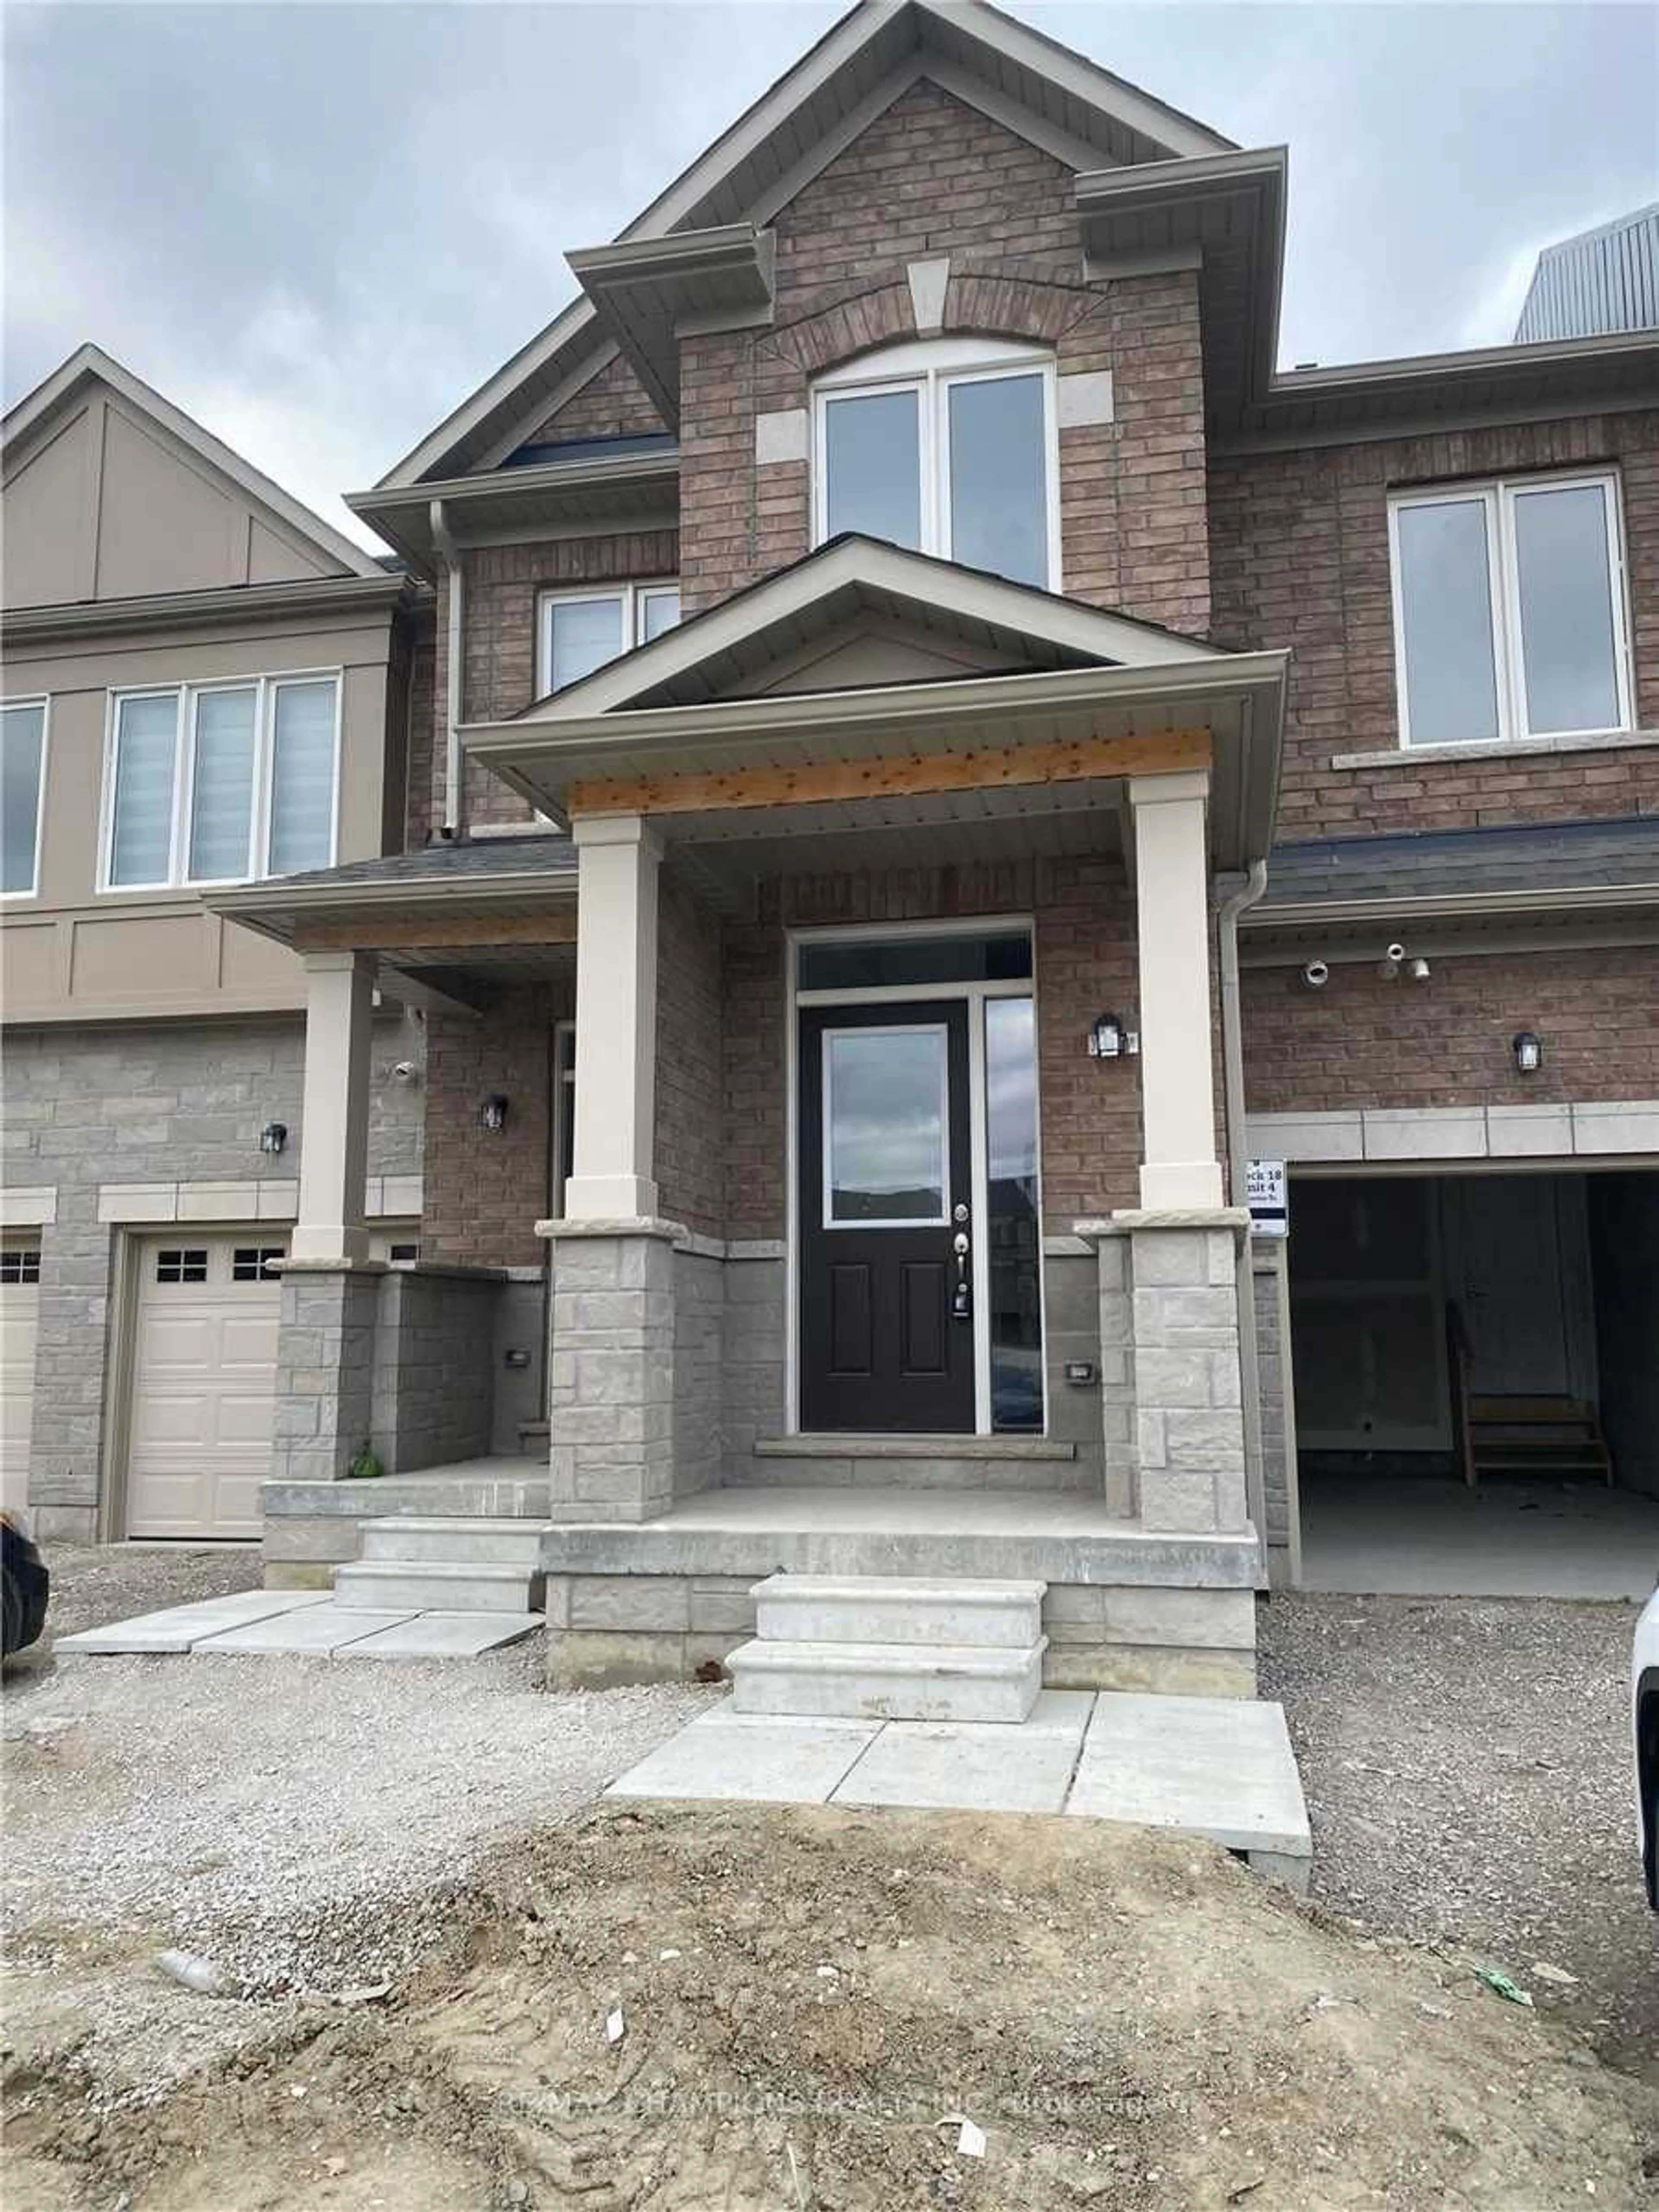 Home with brick exterior material for 36 Savino Dr, Brampton Ontario L6Z 1X9